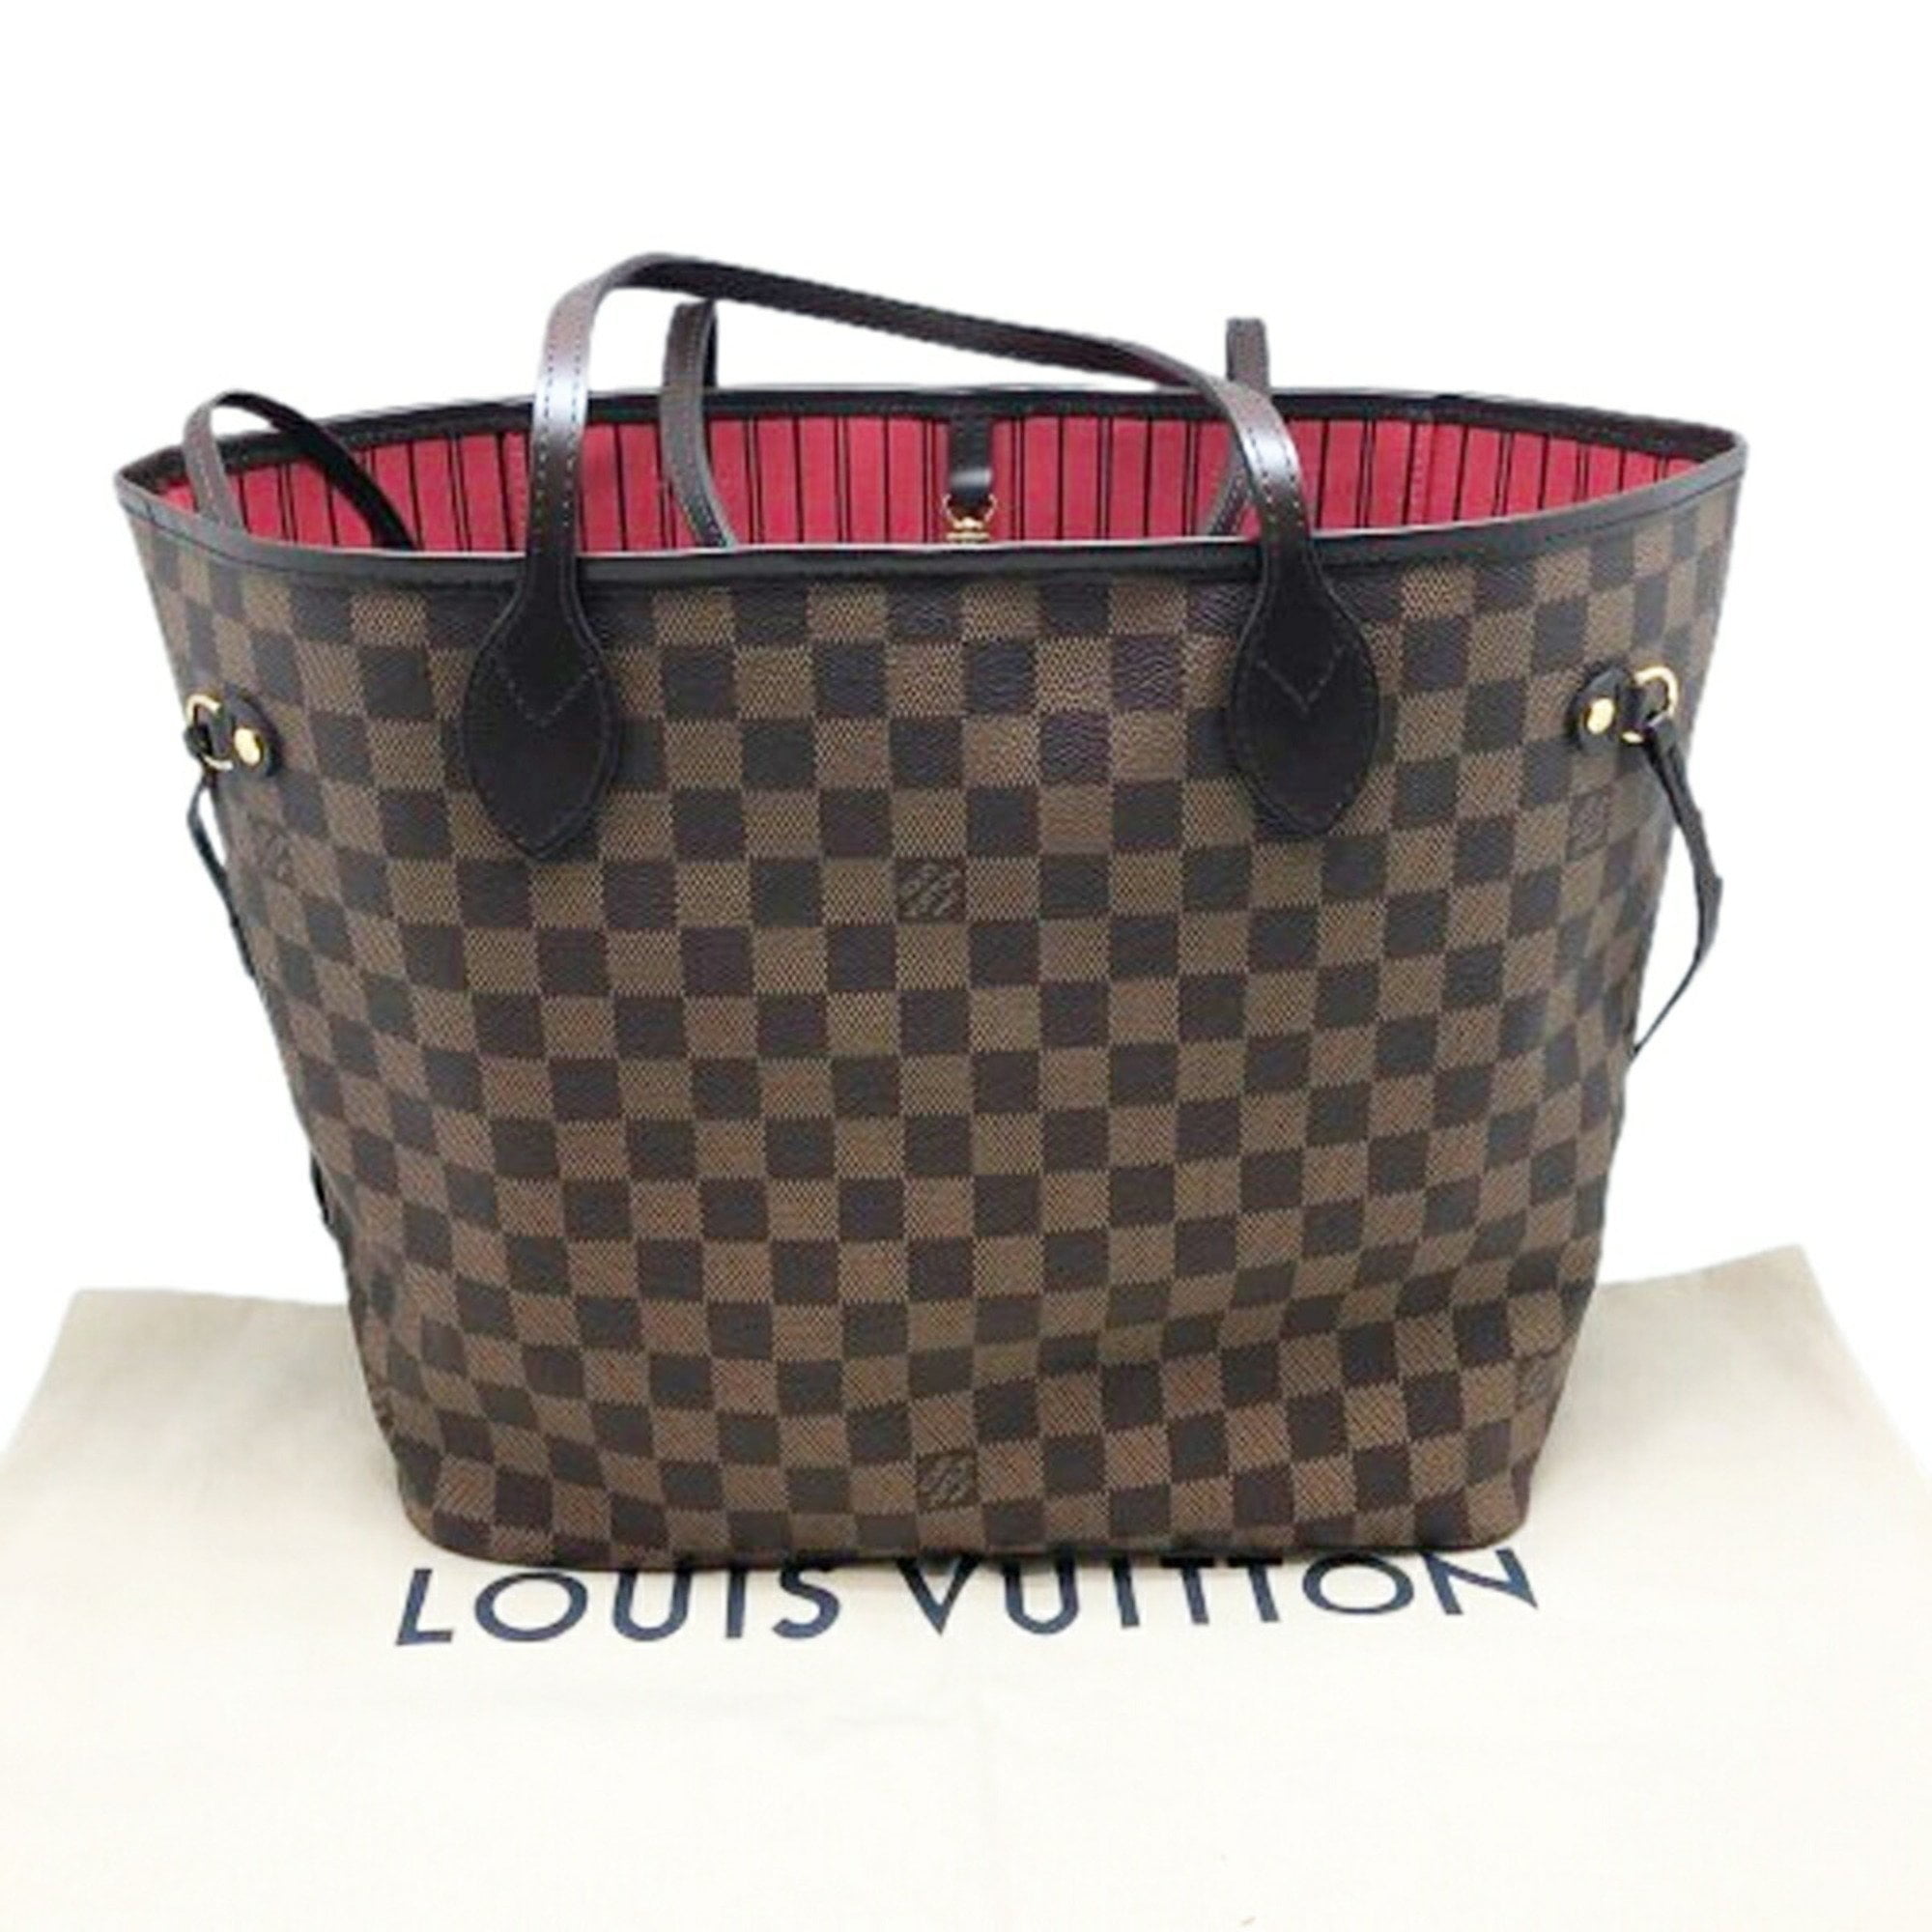 Louis Vuitton - Authenticated Neverfull Handbag - Cloth Multicolour for Women, Never Worn